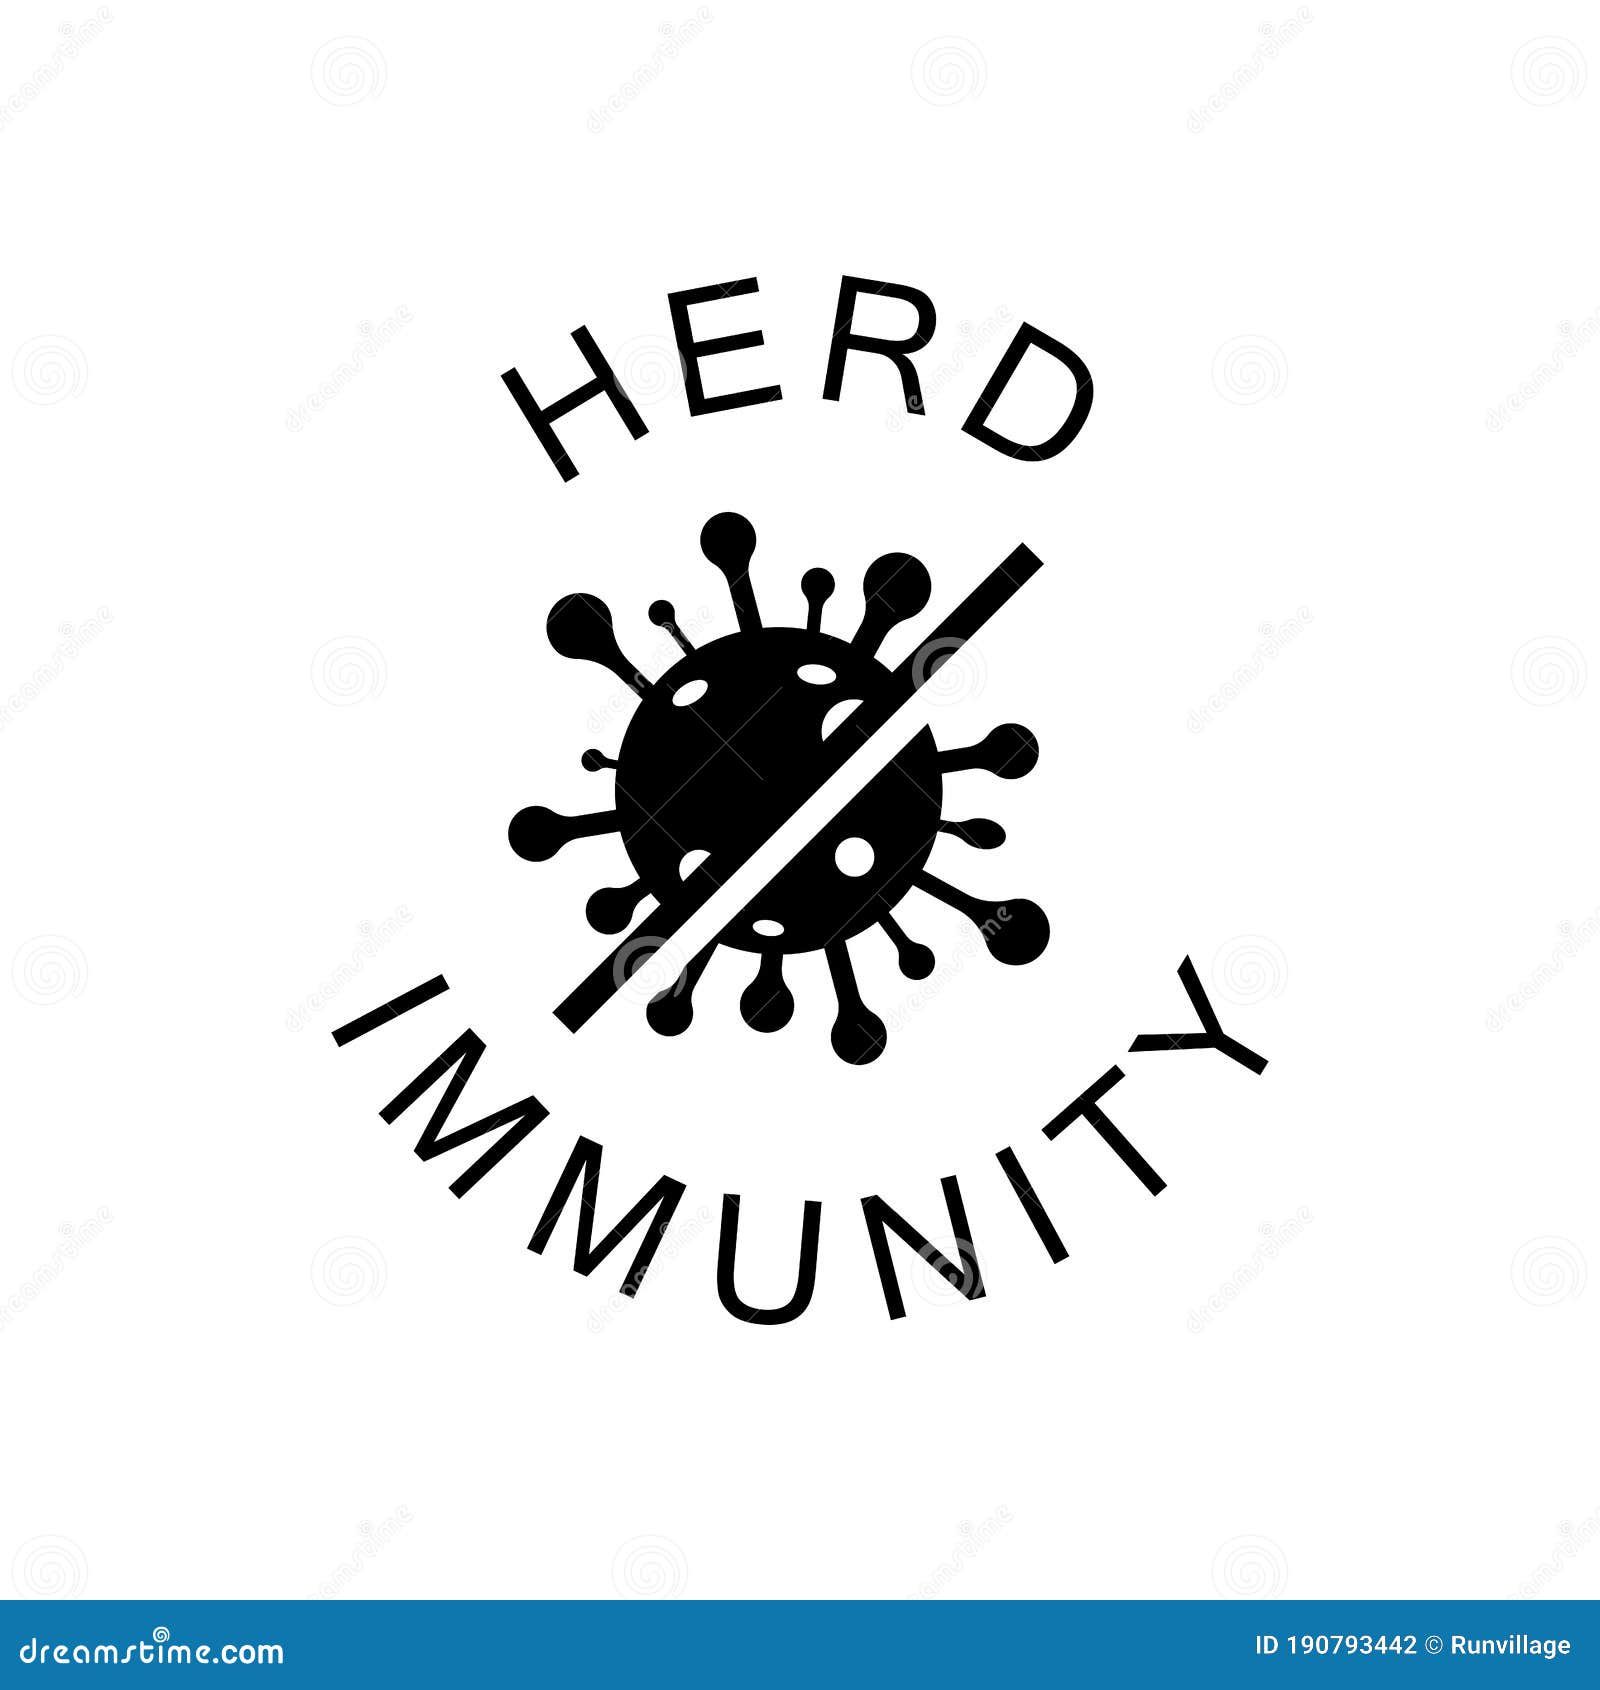 herd immunity logo icon for new normal lifestye concept